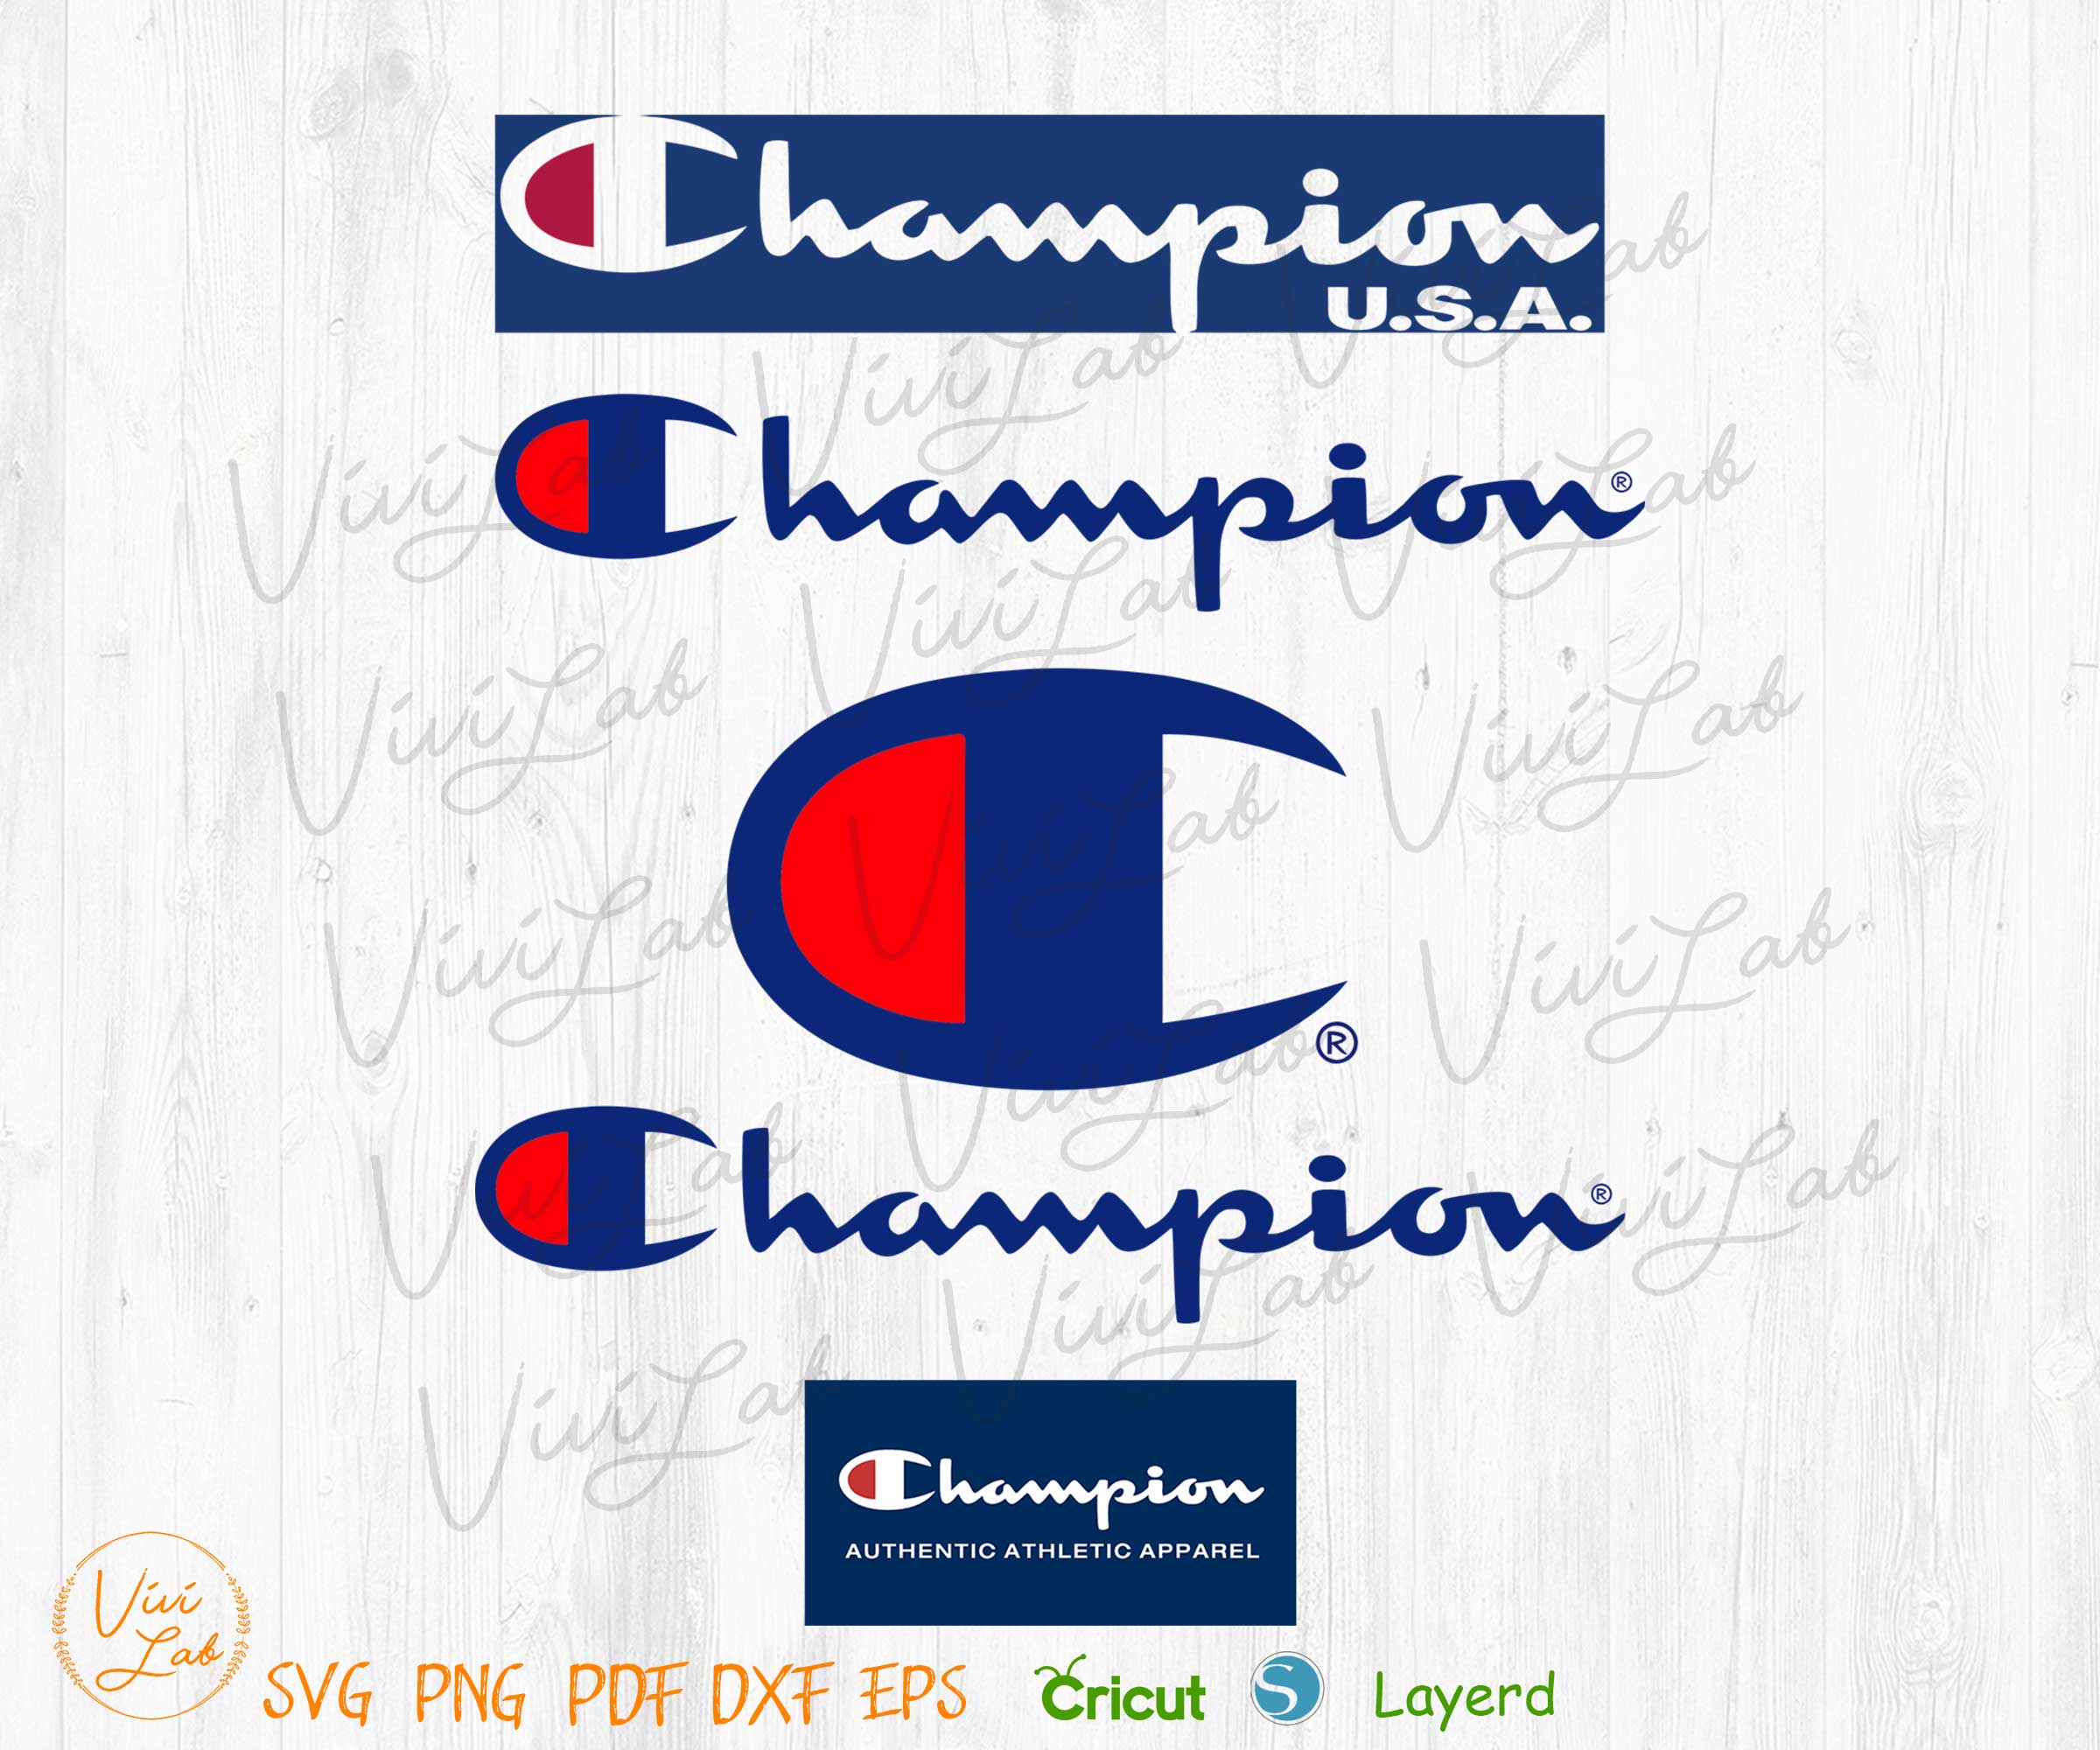 Champion fashion brand logo svg png vector